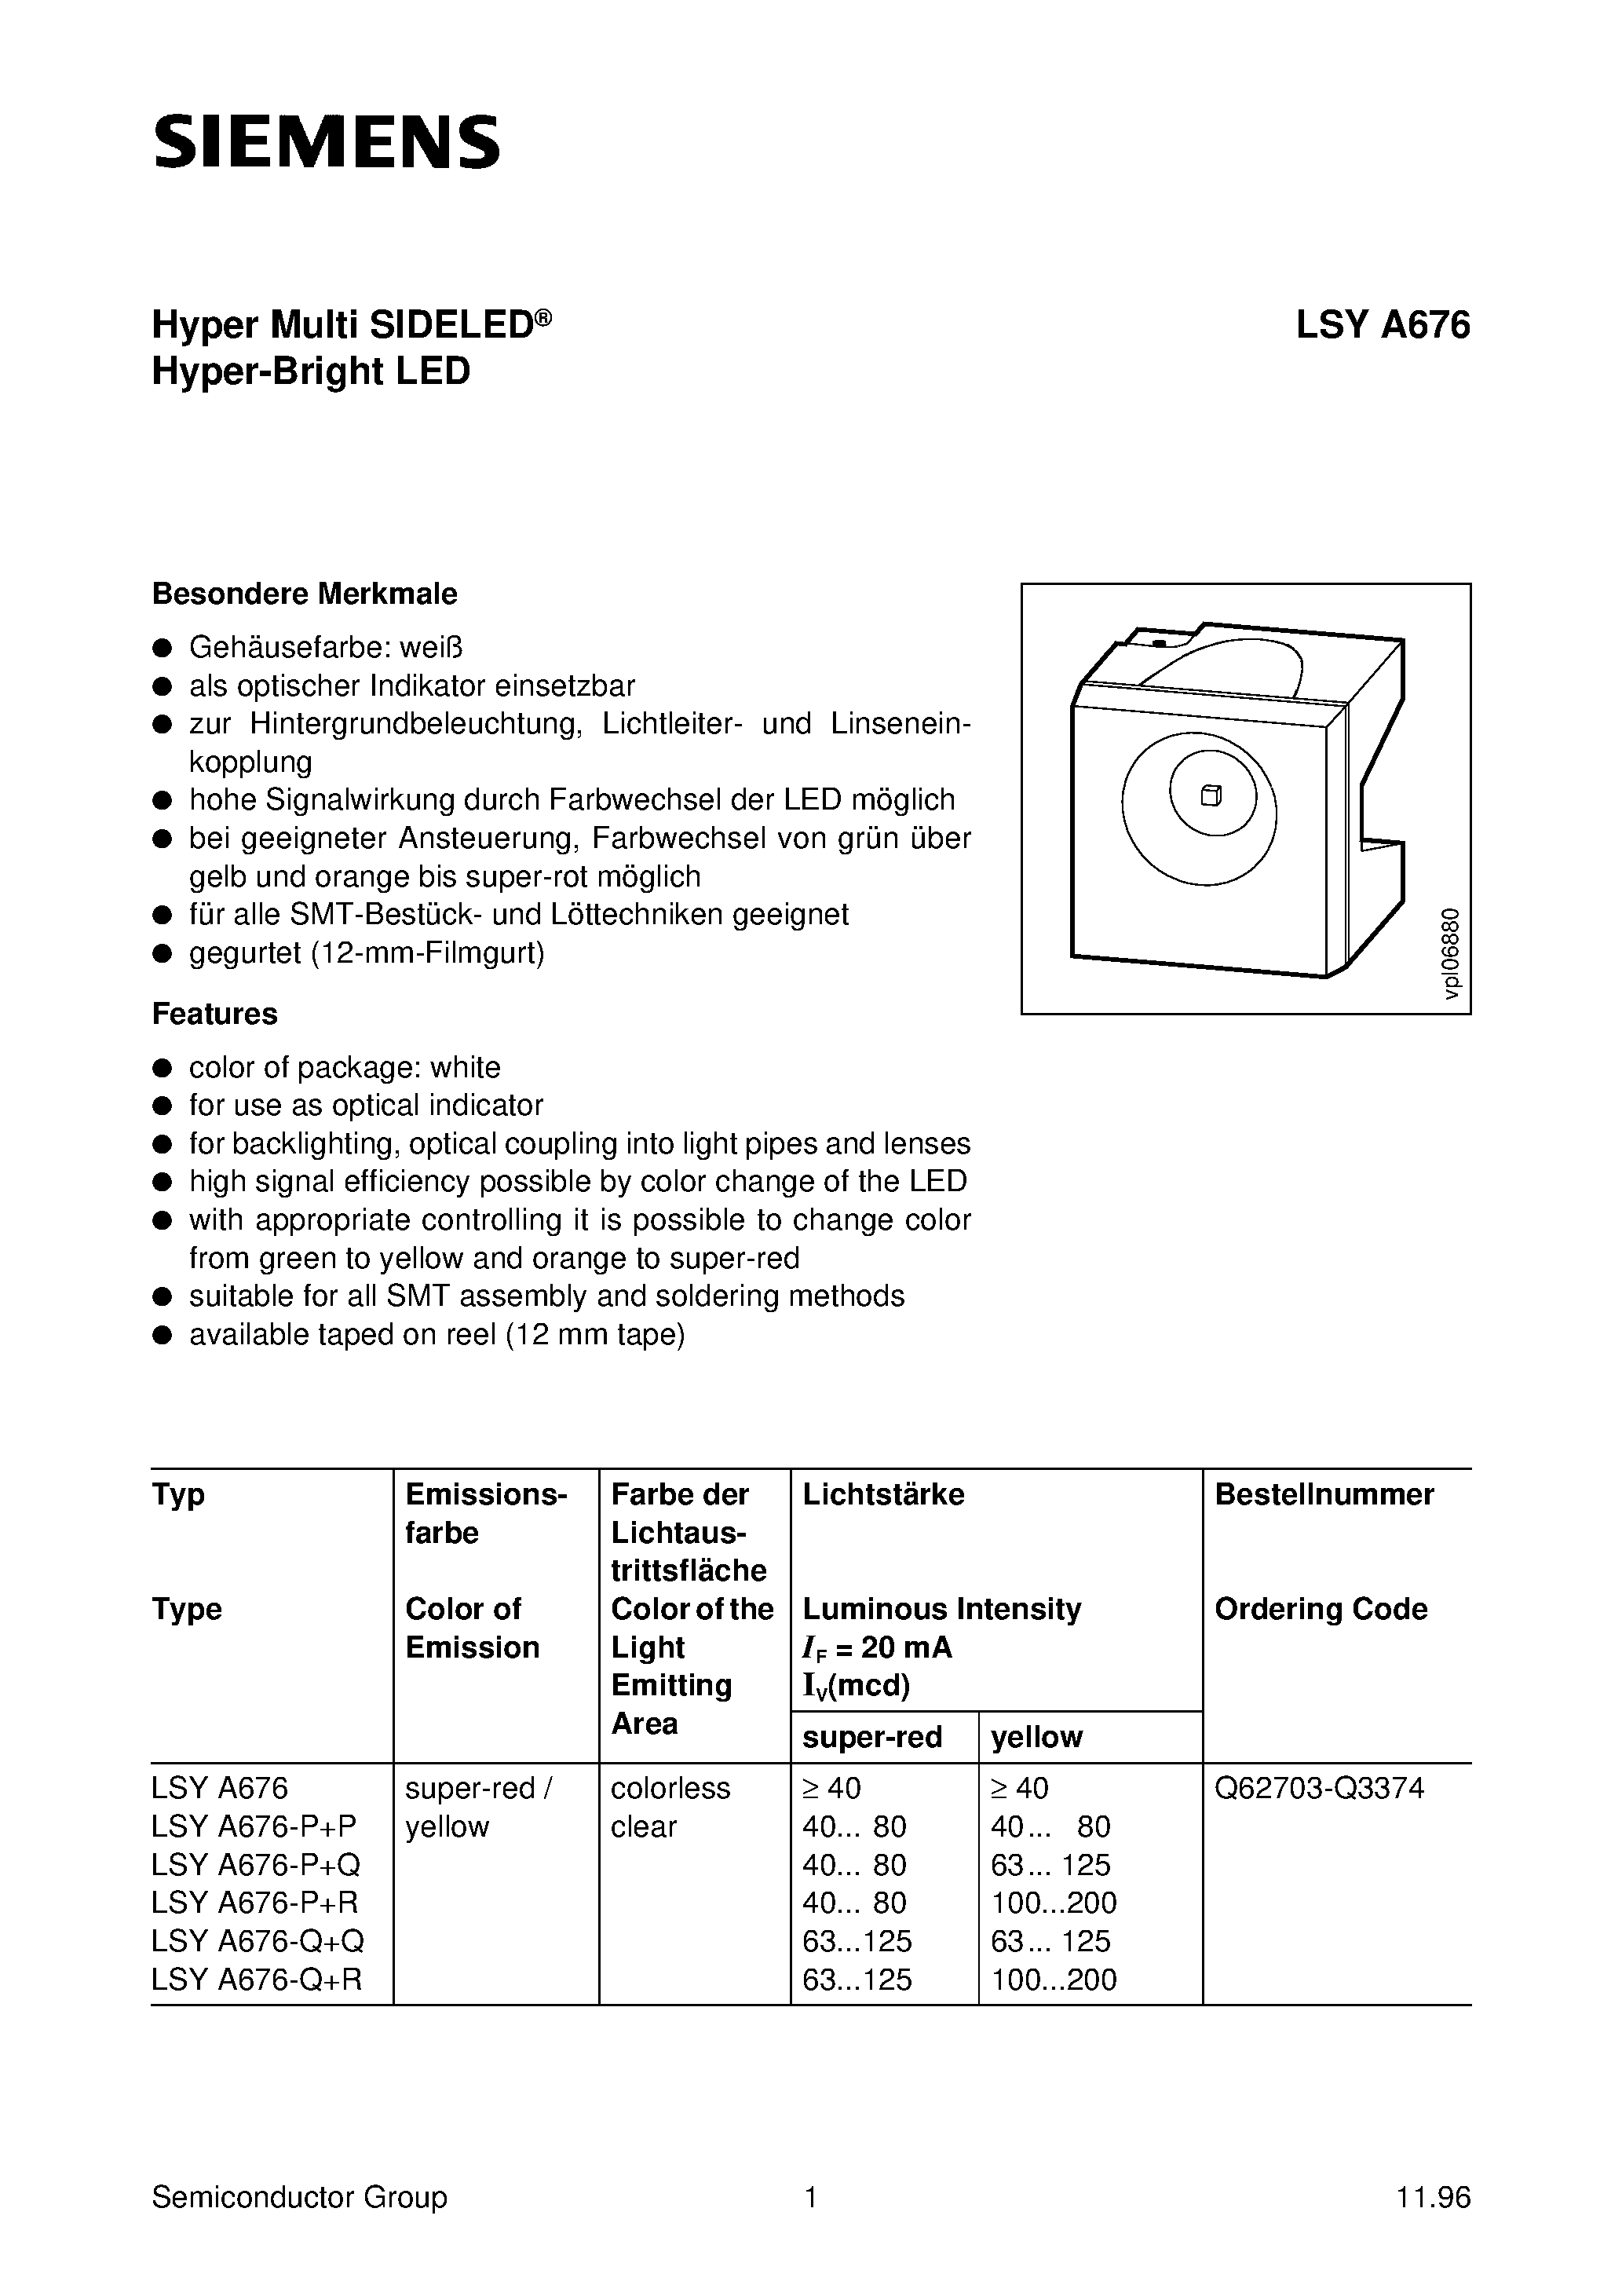 Datasheet LSYA676-Q+R - Hyper Multi SIDELED Hyper-Bright LED page 1